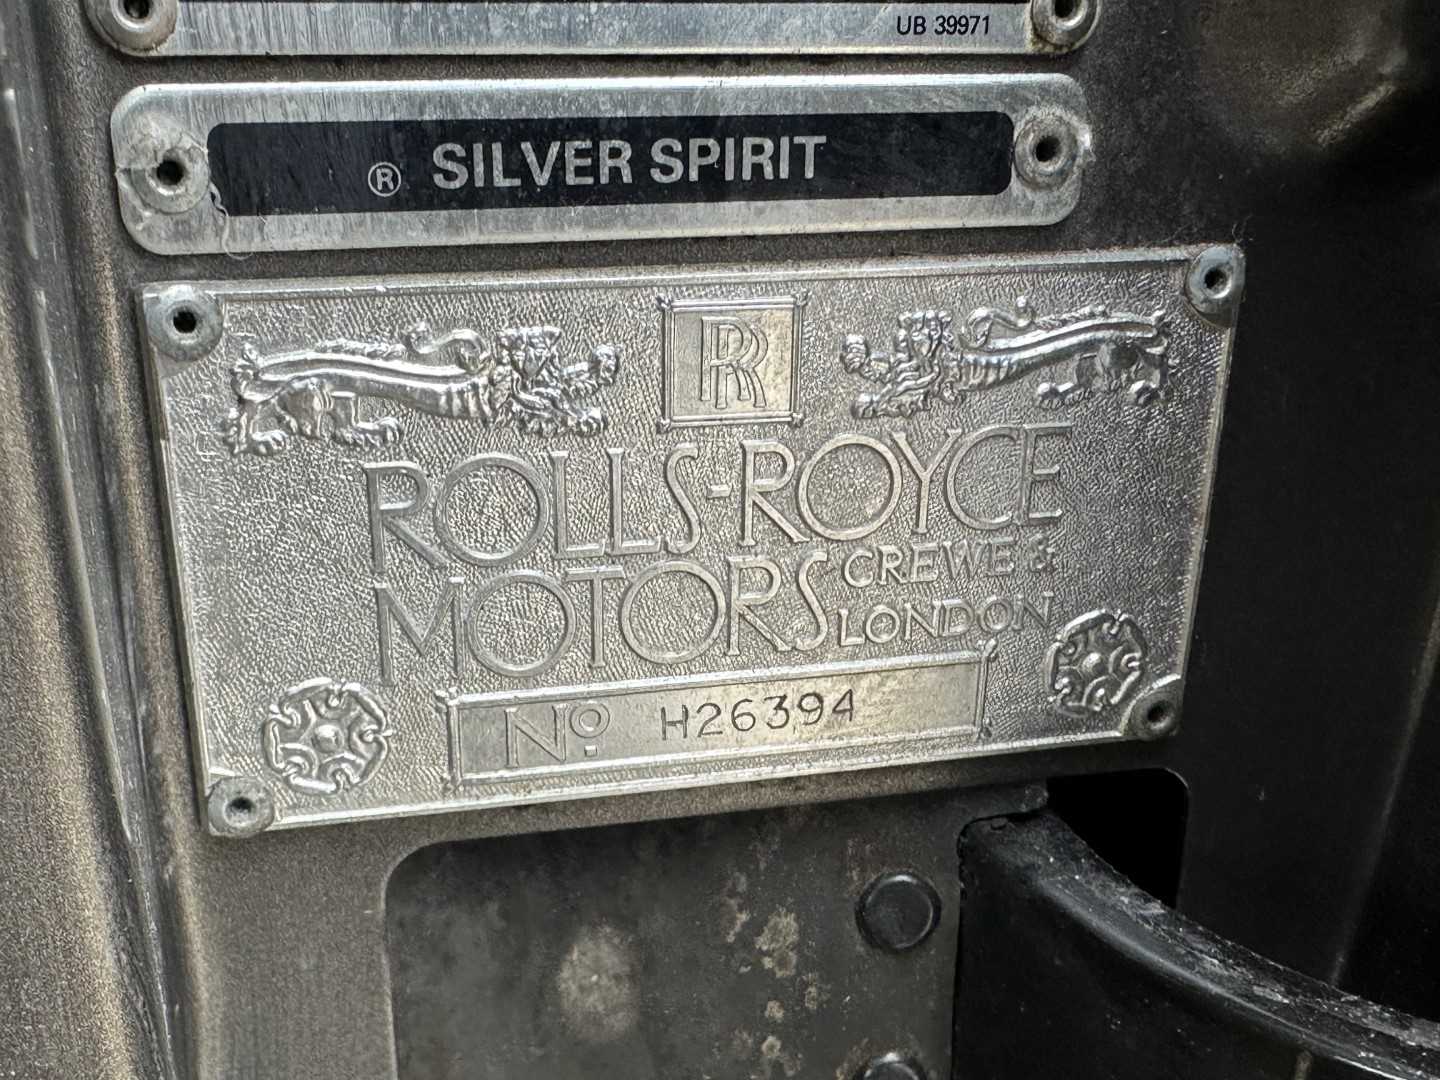 1989 Rolls-Royce Silver Spirit saloon, 6.75 litre V8, fuel injection, automatic, reg. no. E20 RRR - Image 14 of 31